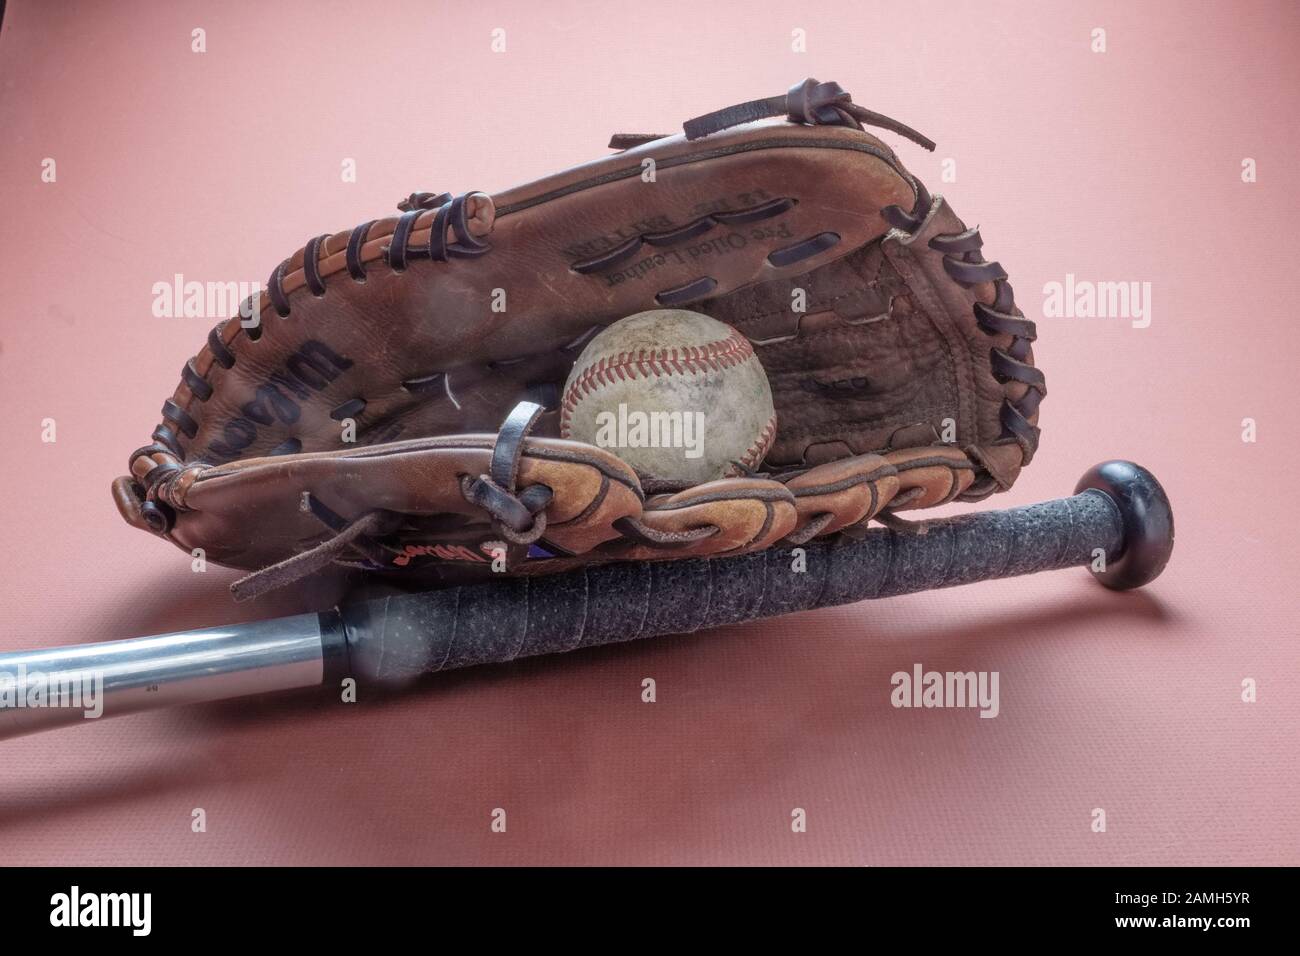 Play ball!  The great American pastime - baseball.  A leather baseball fielder’s glove, a metal baseball bat, and a play worn baseball inside the mitt Stock Photo